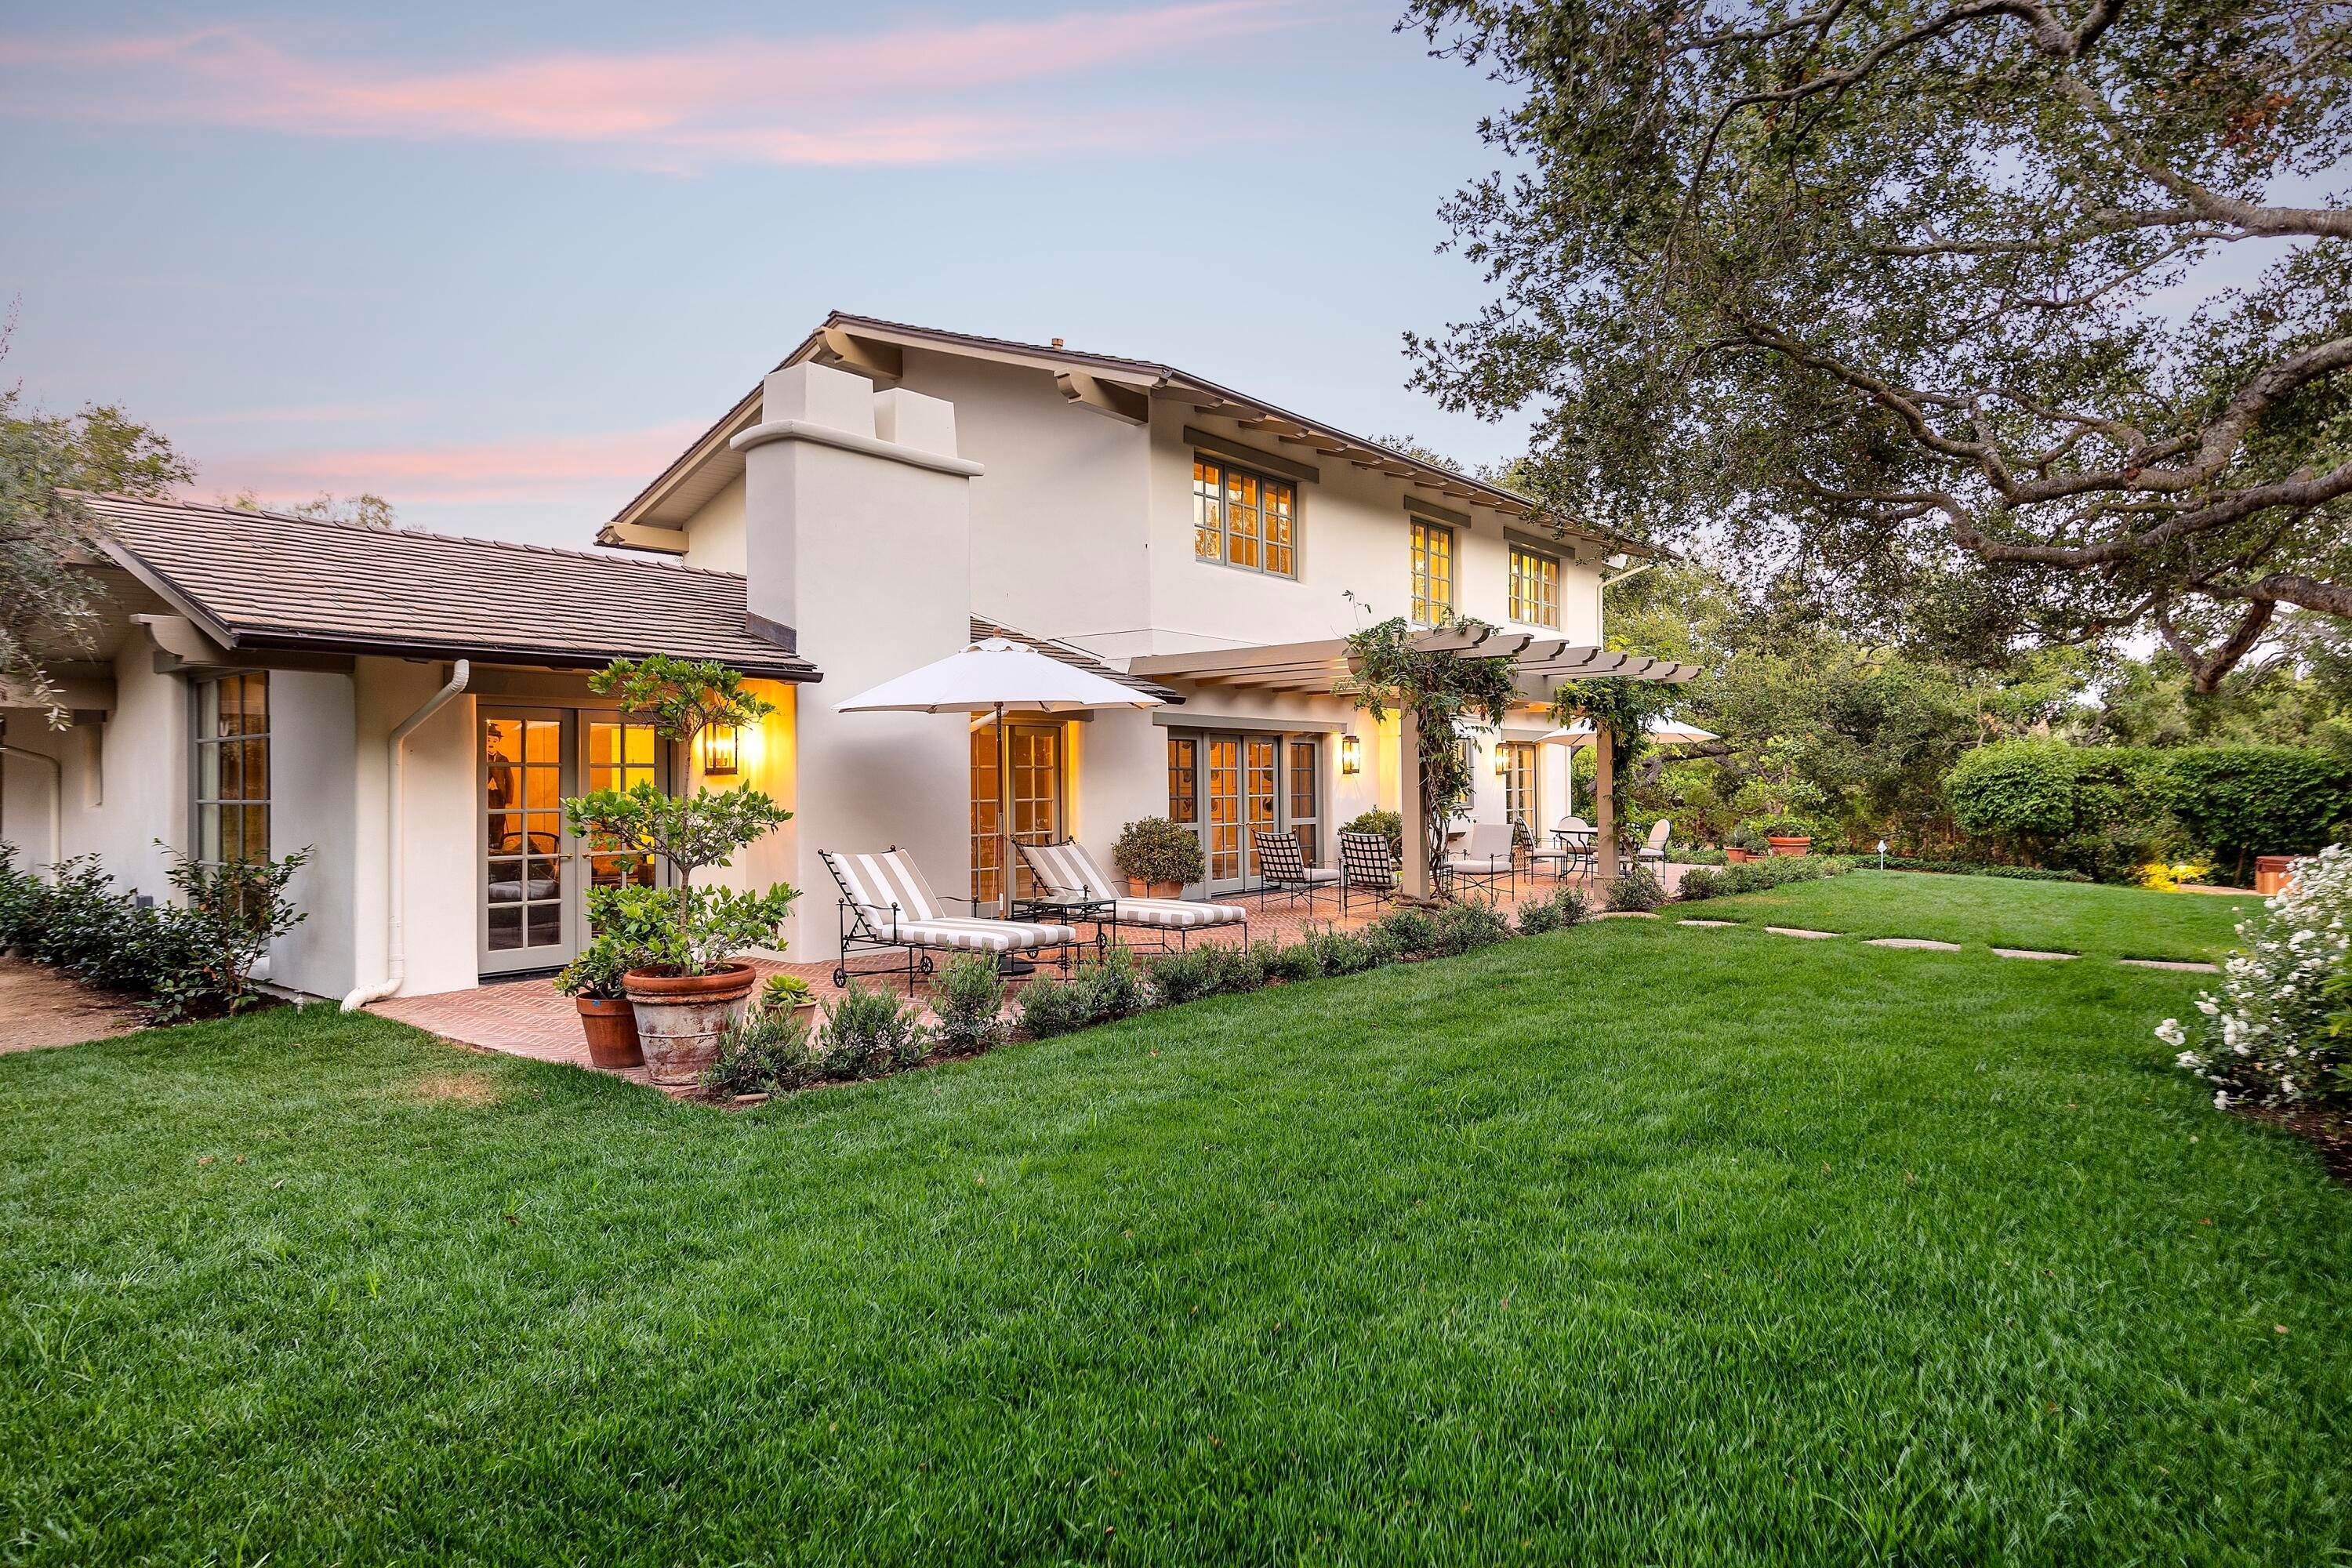 27. Estate for Sale at 325 San Ysidro Road Montecito, California 93108 United States